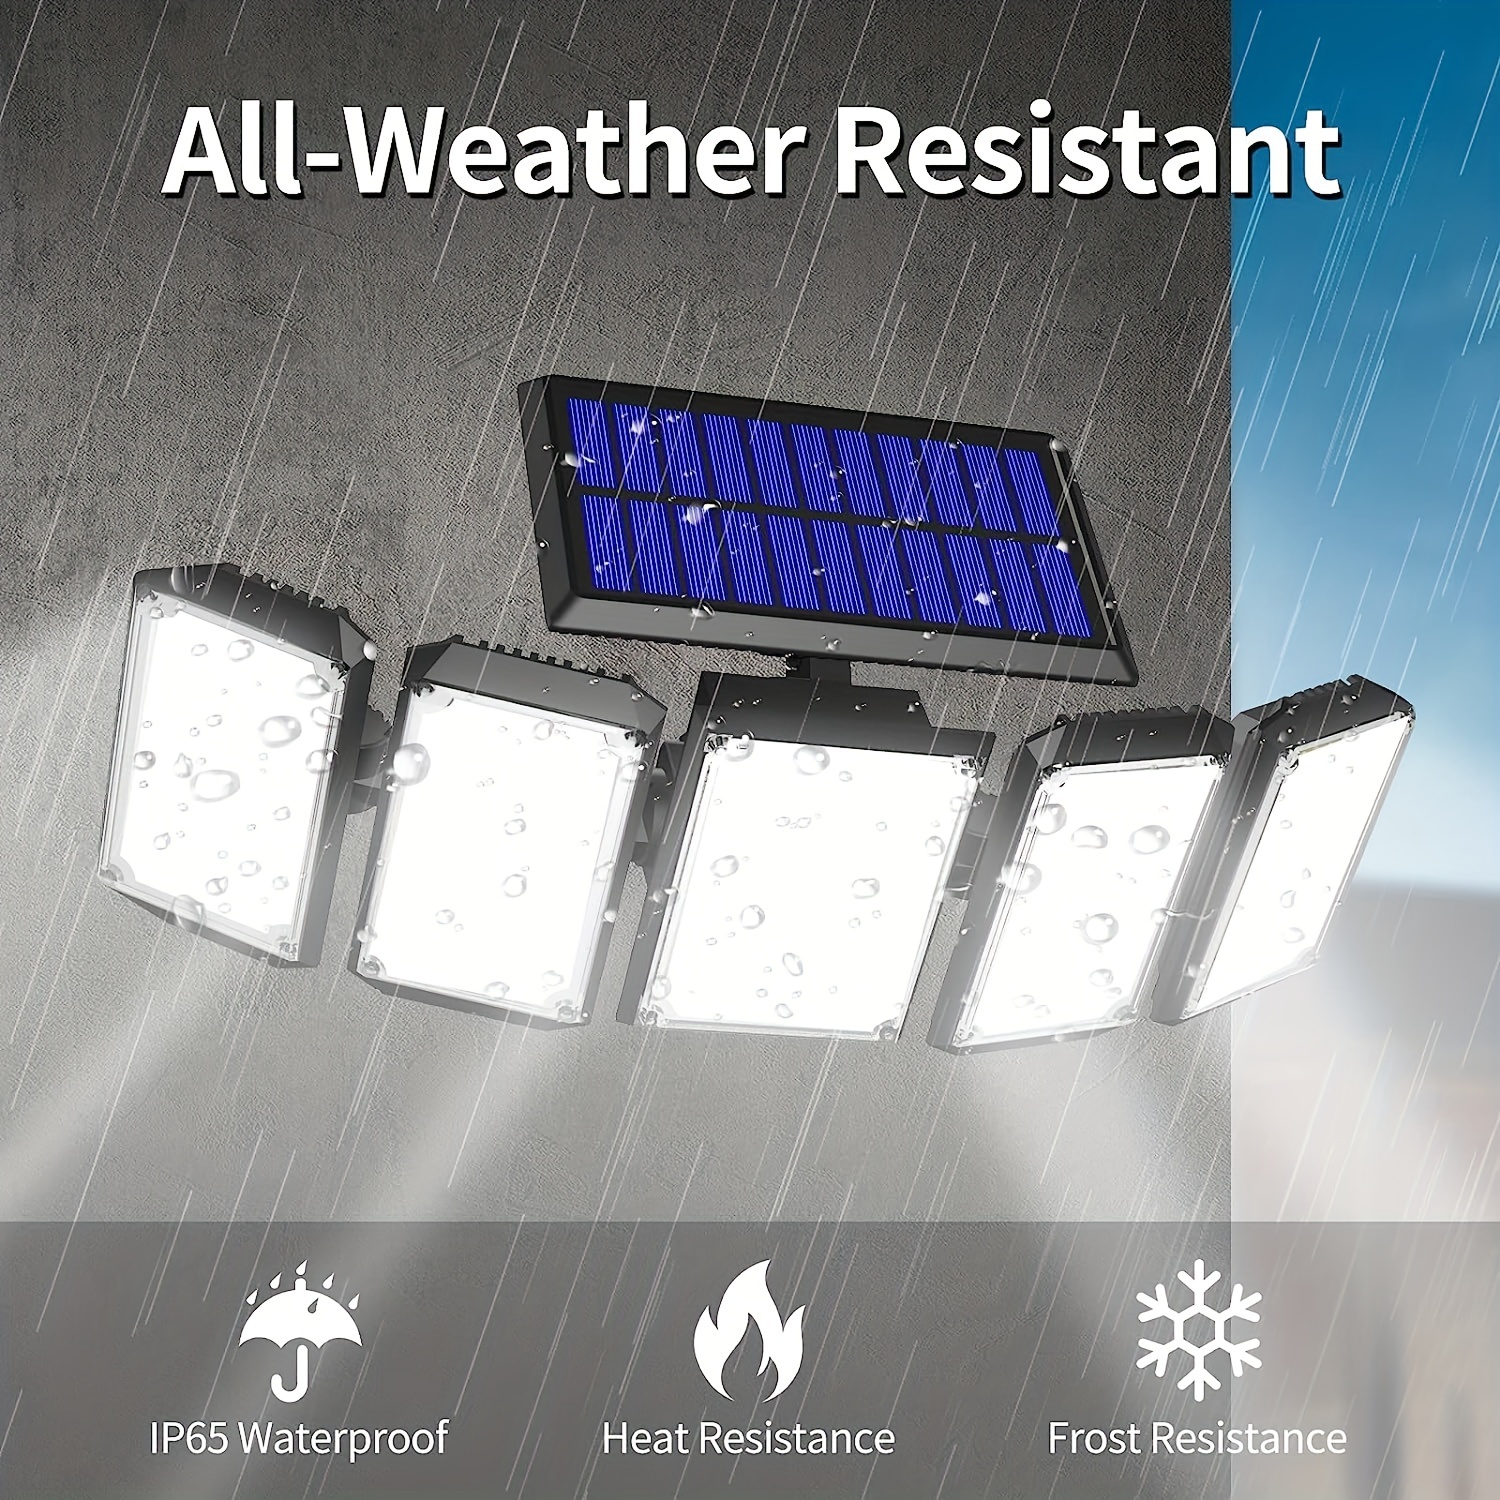 Luces solares para exteriores con sensor de movimiento – Nueva  actualización de 268 ledes, luz de seguridad solar IP65, impermeable, luces  de pared